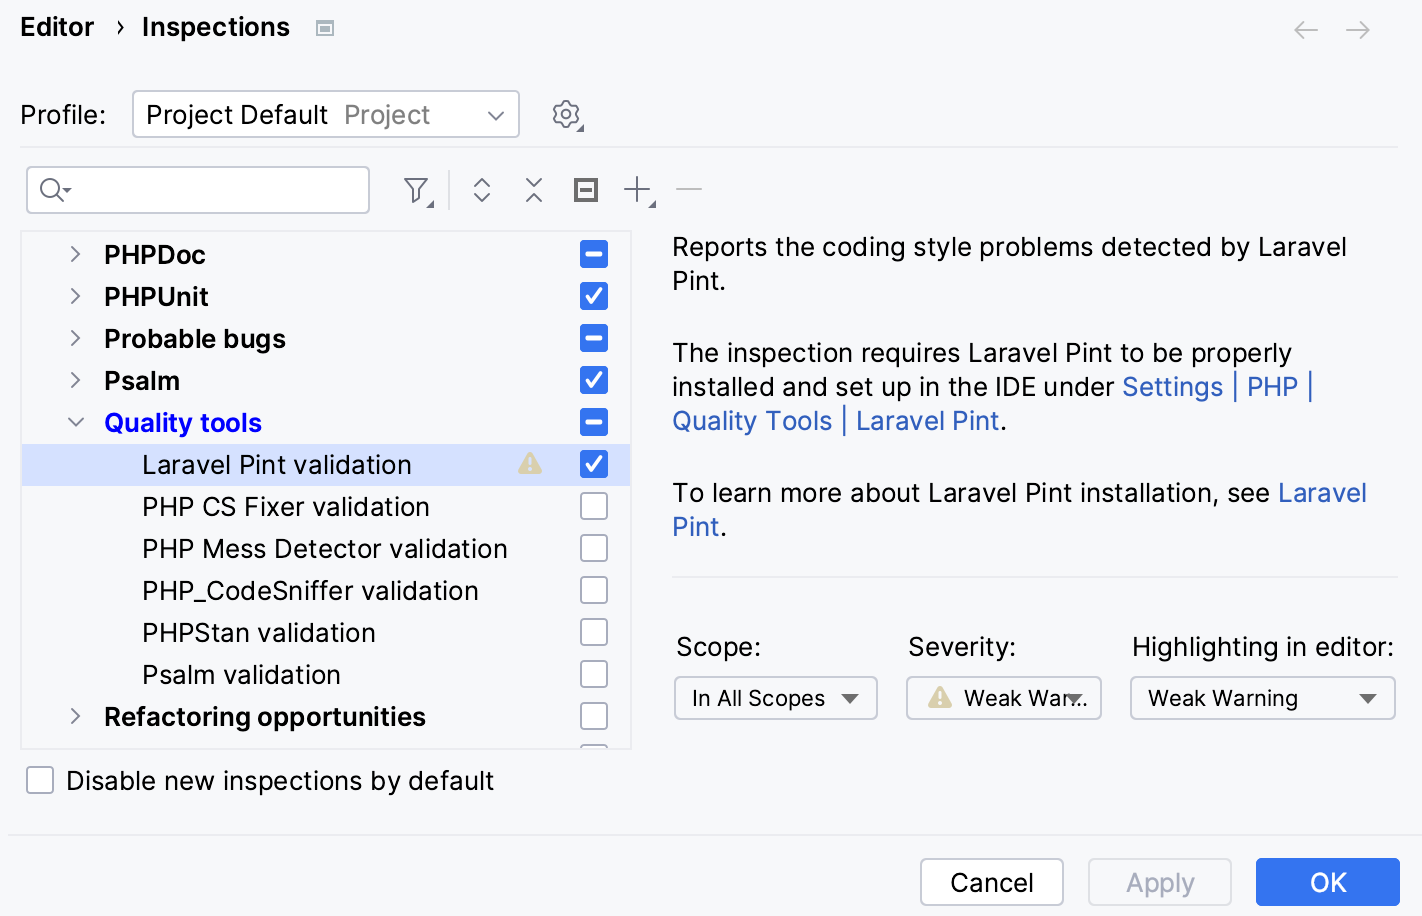 Select Laravel Pint validation checkbox